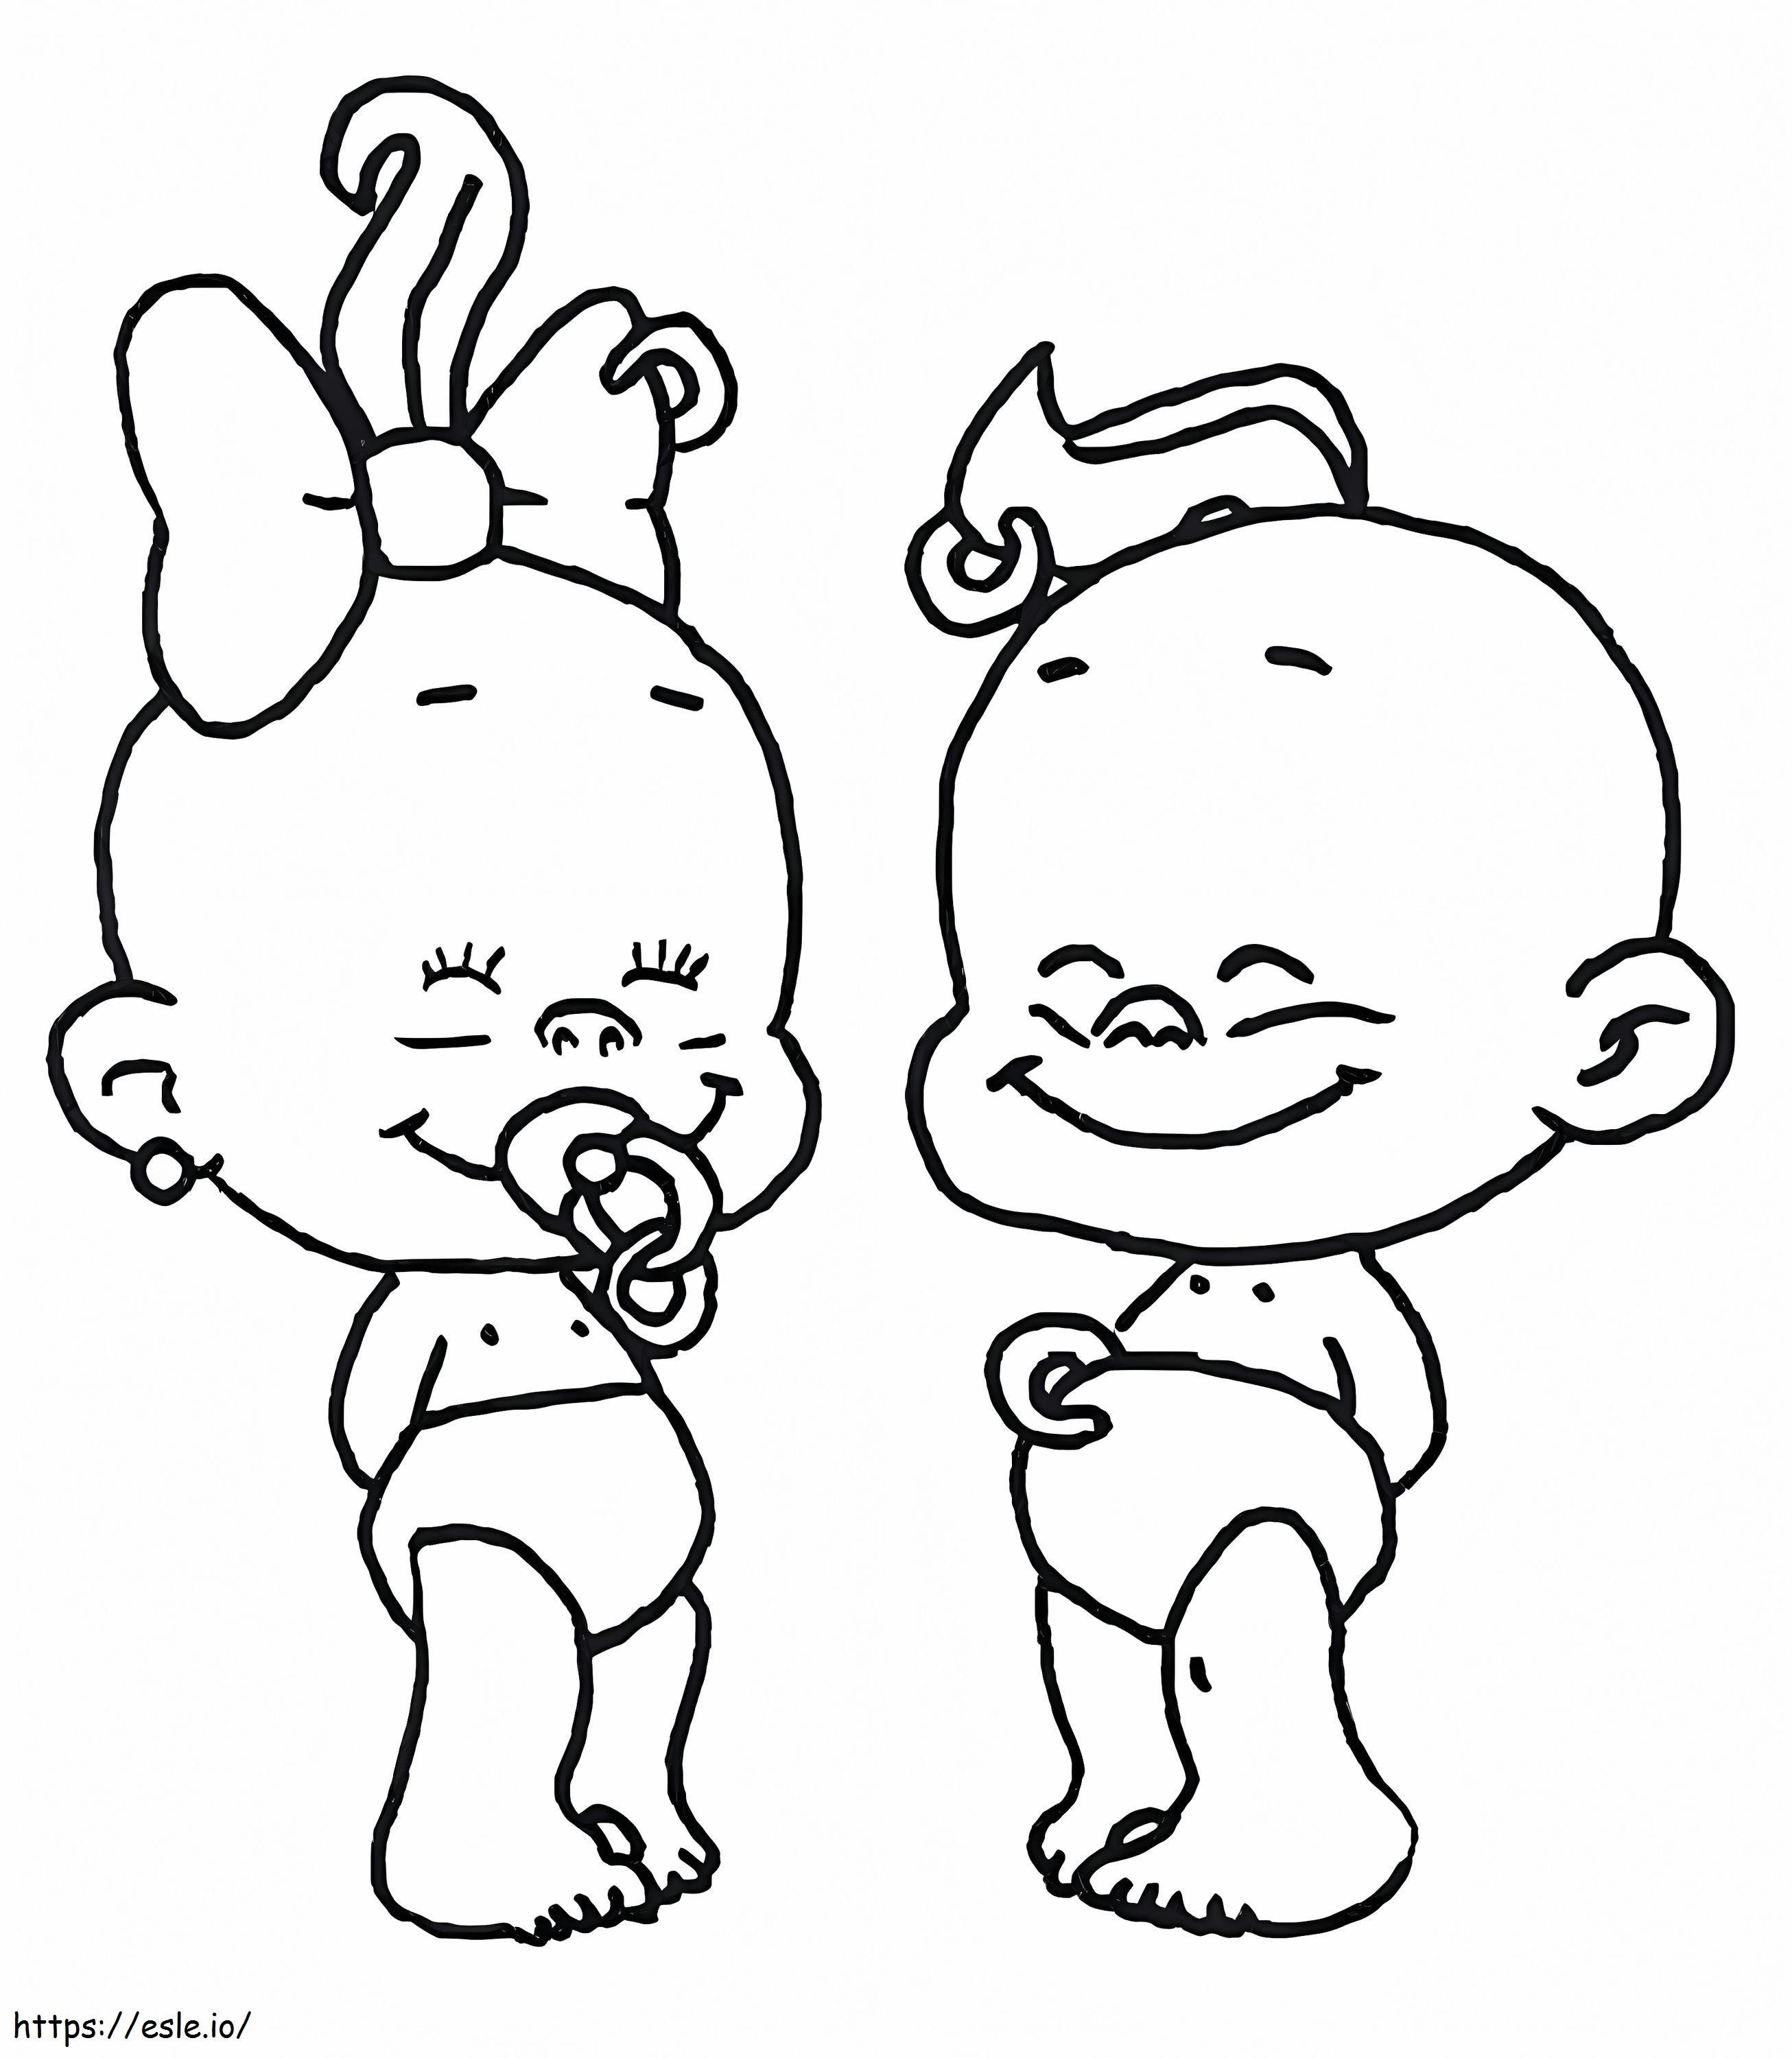 Kids Winni Diaper coloring page